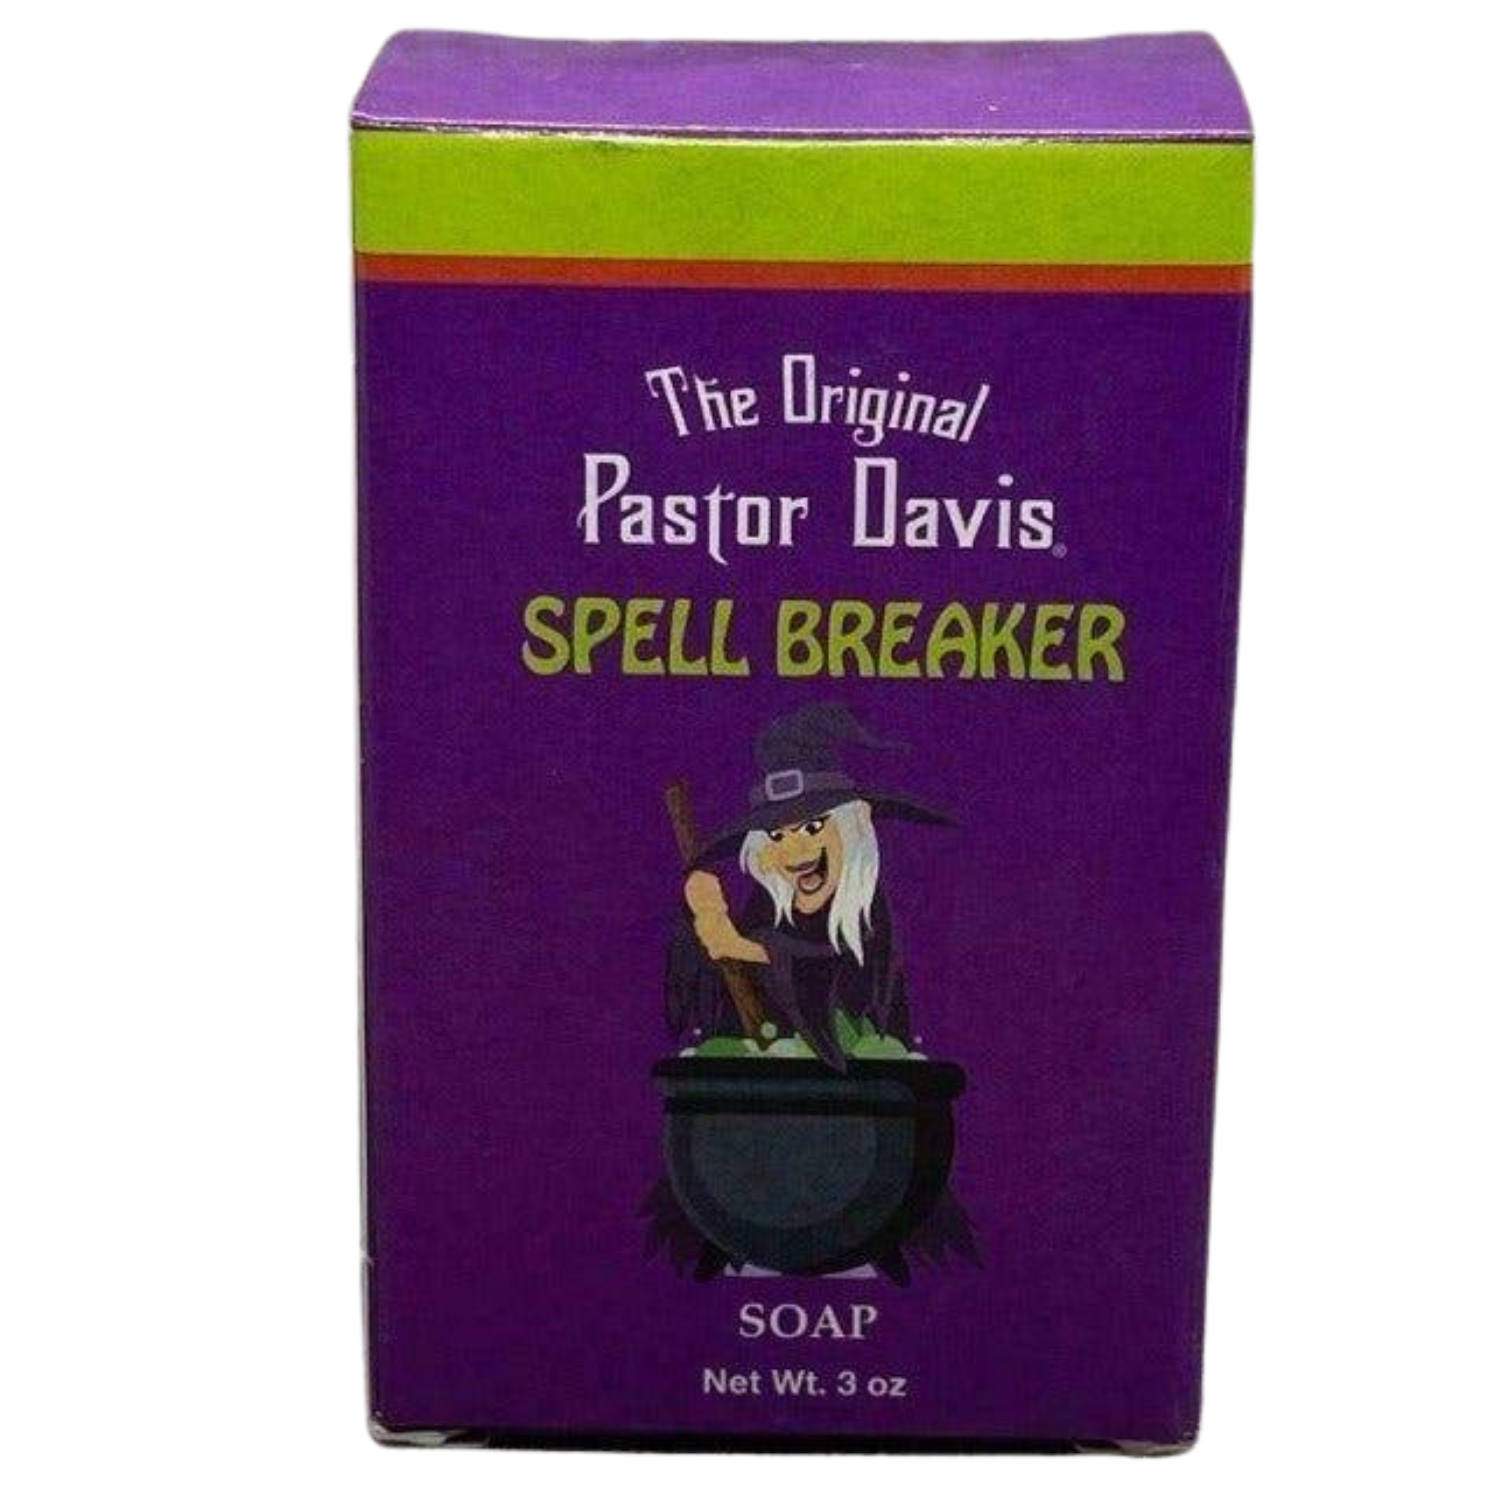 The Original Pastor Davis Spell Breaker Soap